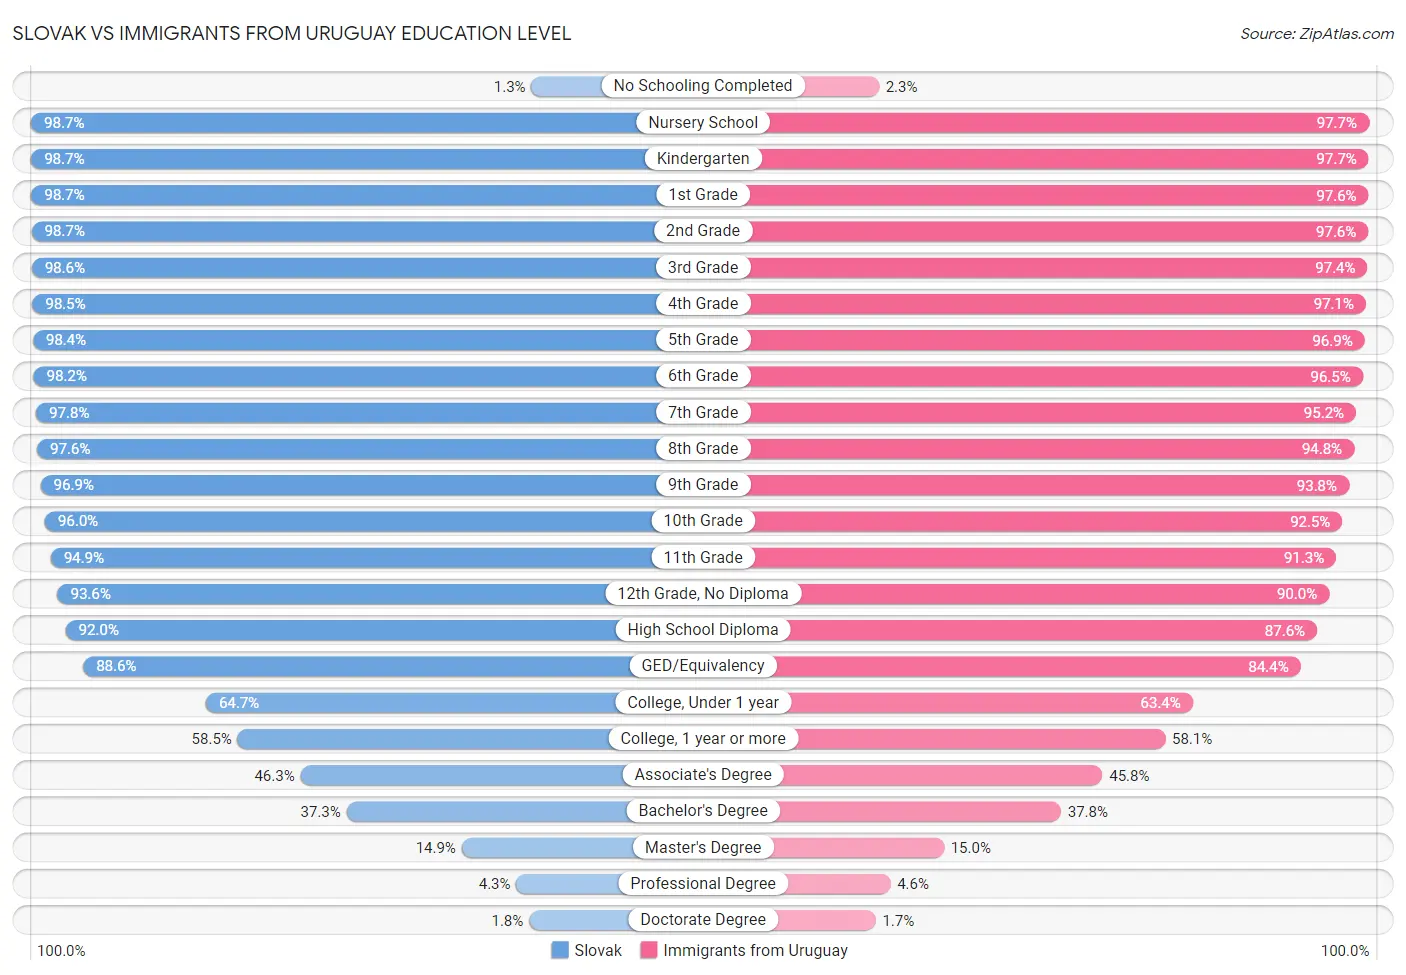 Slovak vs Immigrants from Uruguay Education Level